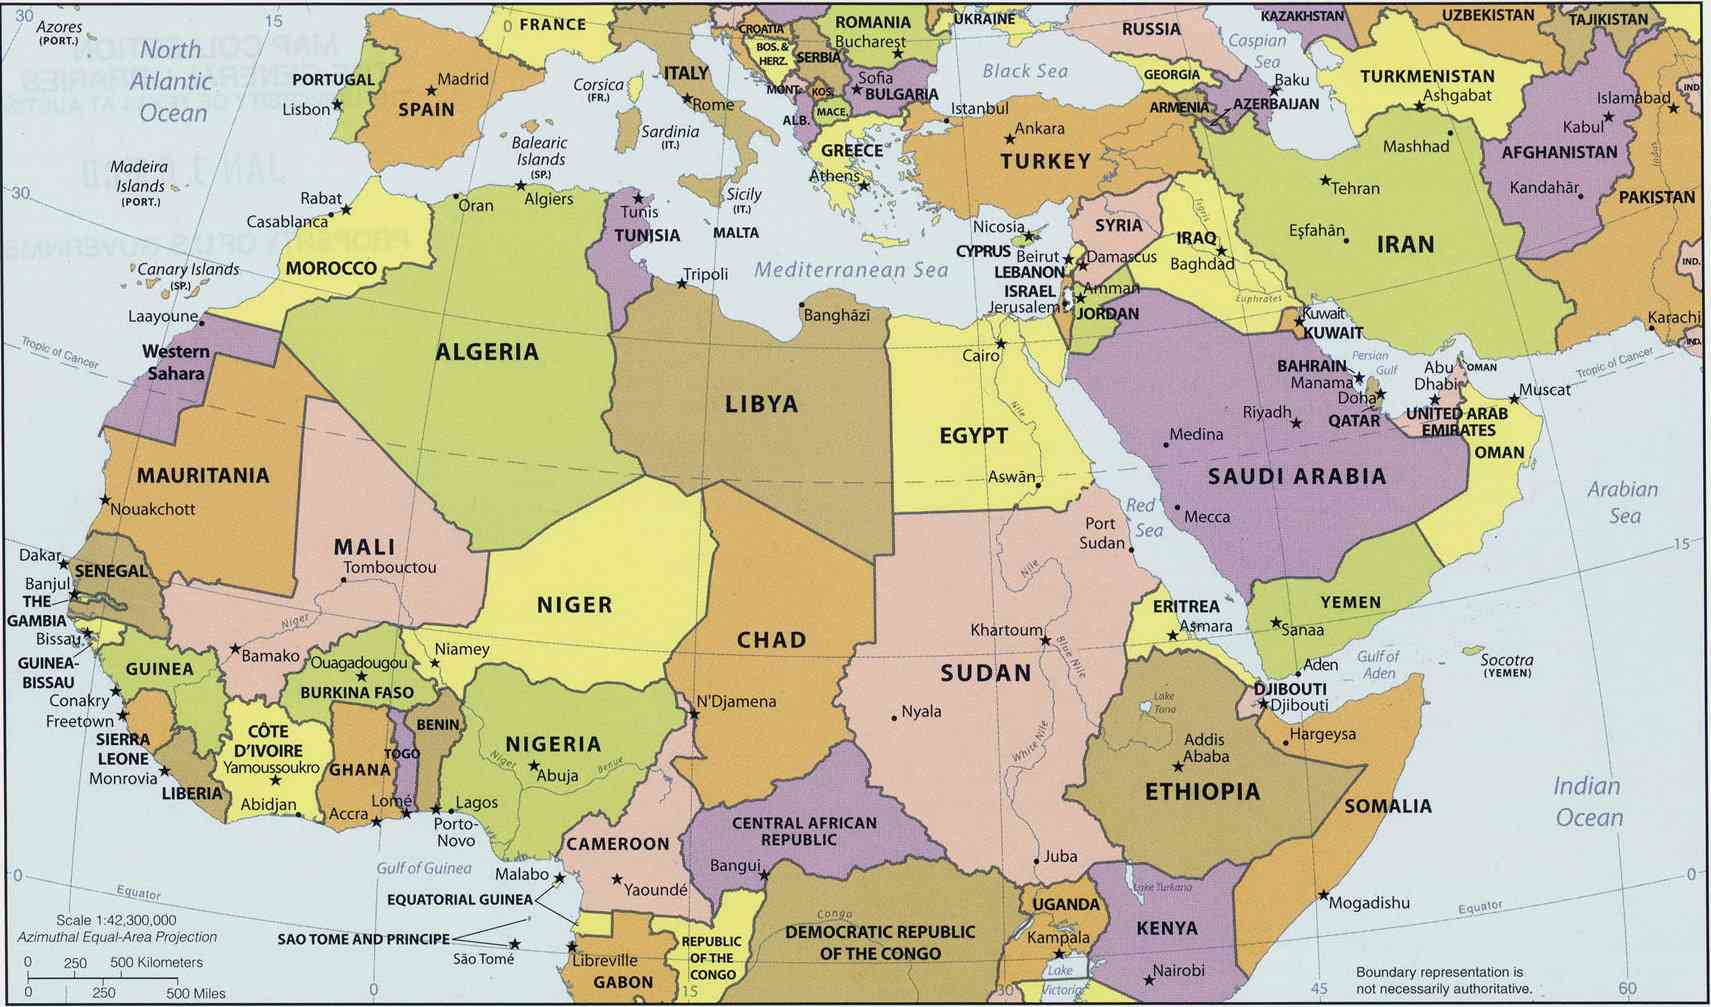 carte afrique nord geographie